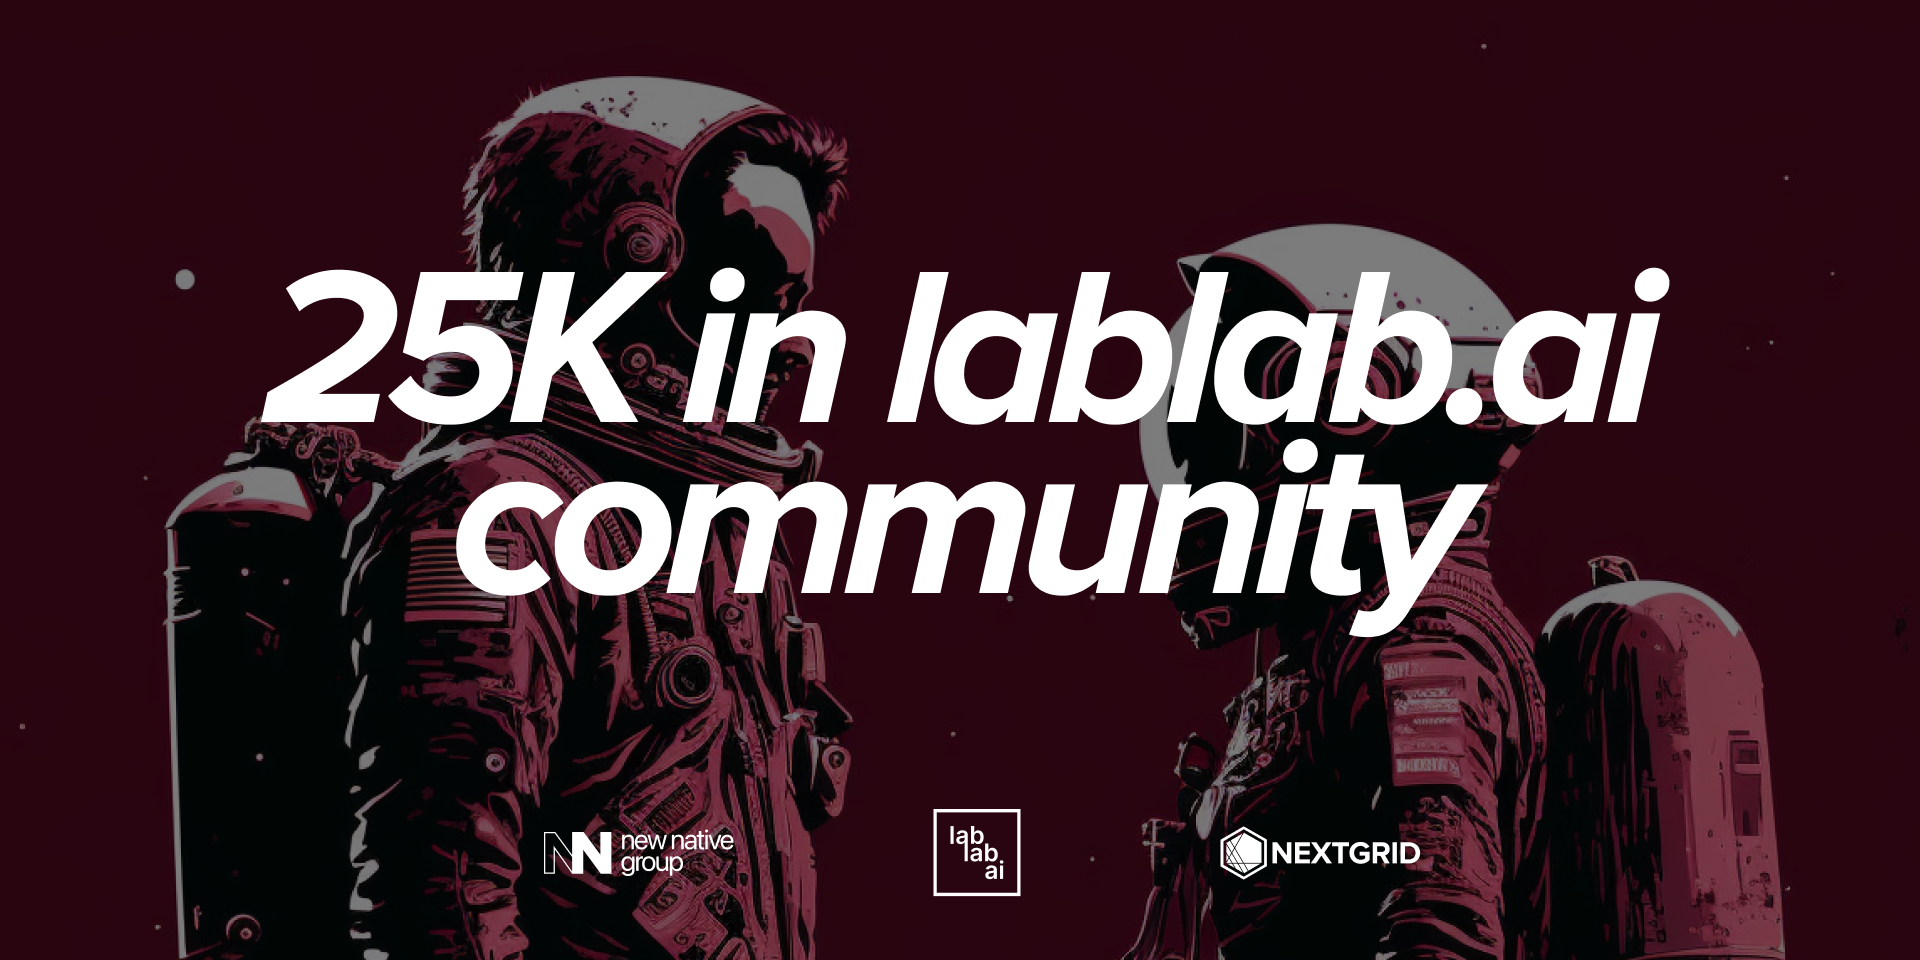 25K Community Members At lablab.ai